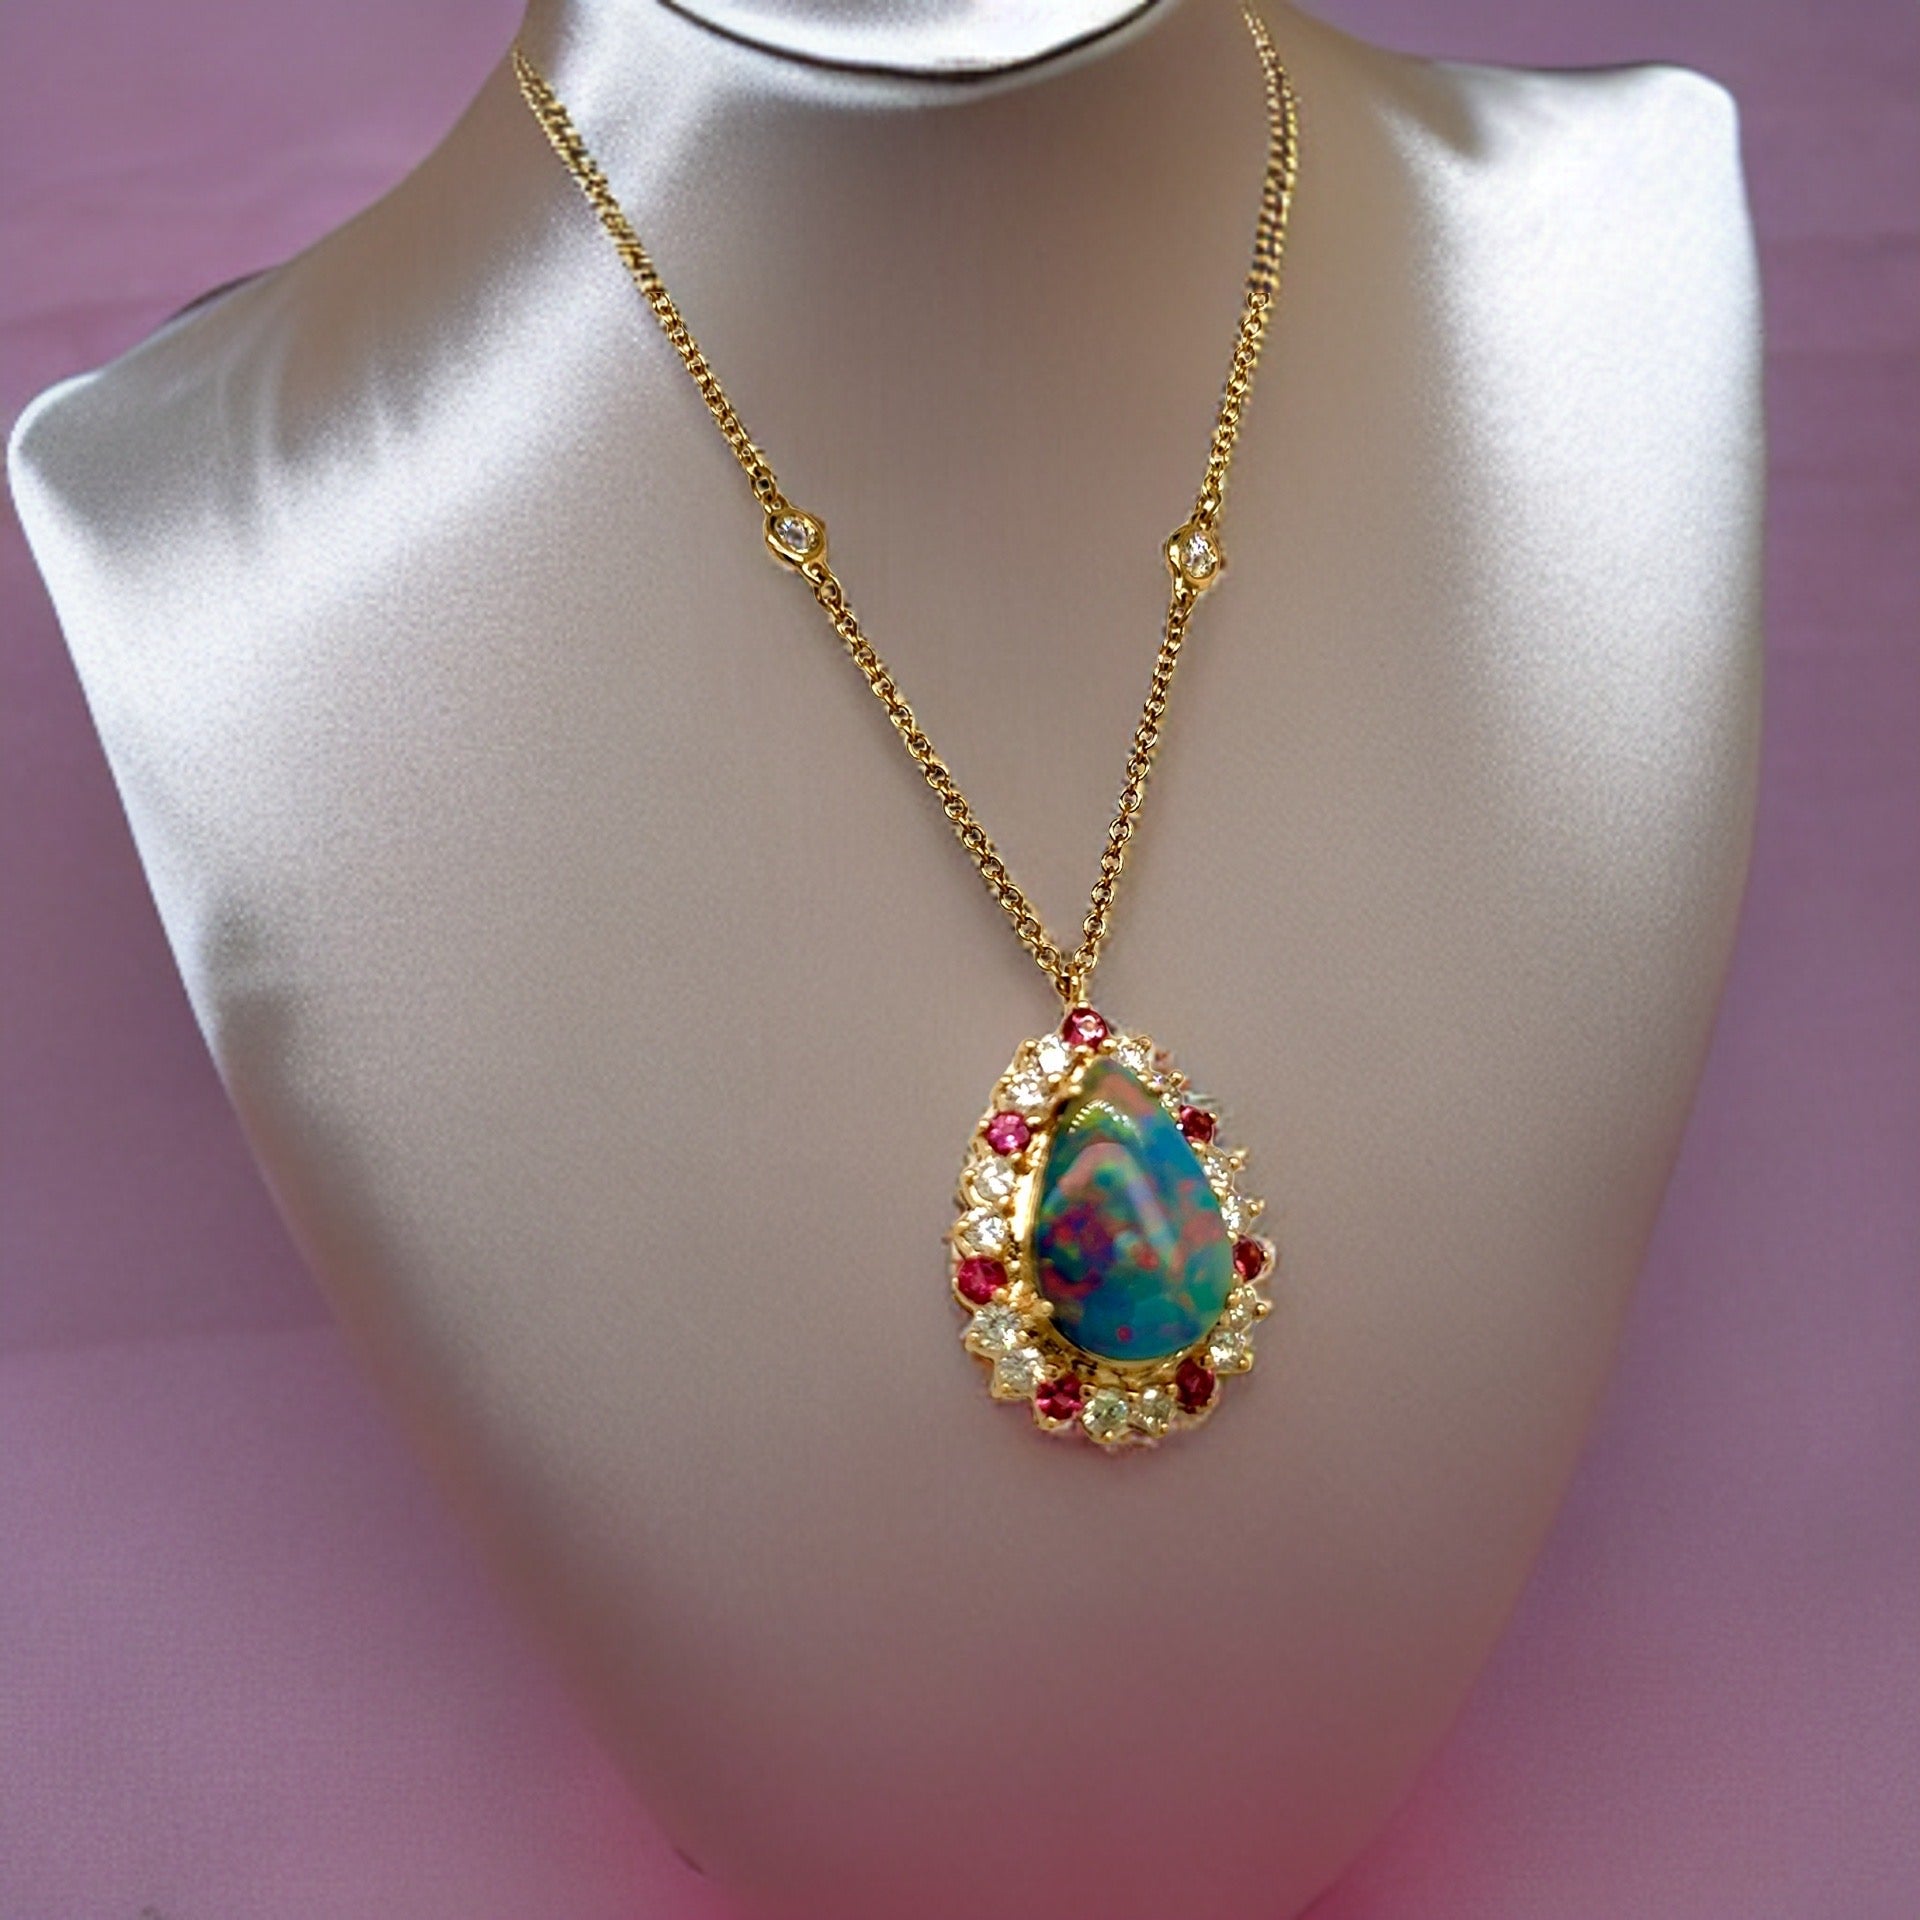 Australian Black Opal Tourmaline & Diamond Pendant 18" 14k Y Gold 4.45 TCW GIA Certified $7,950 212090 - Certified Fine Jewelry